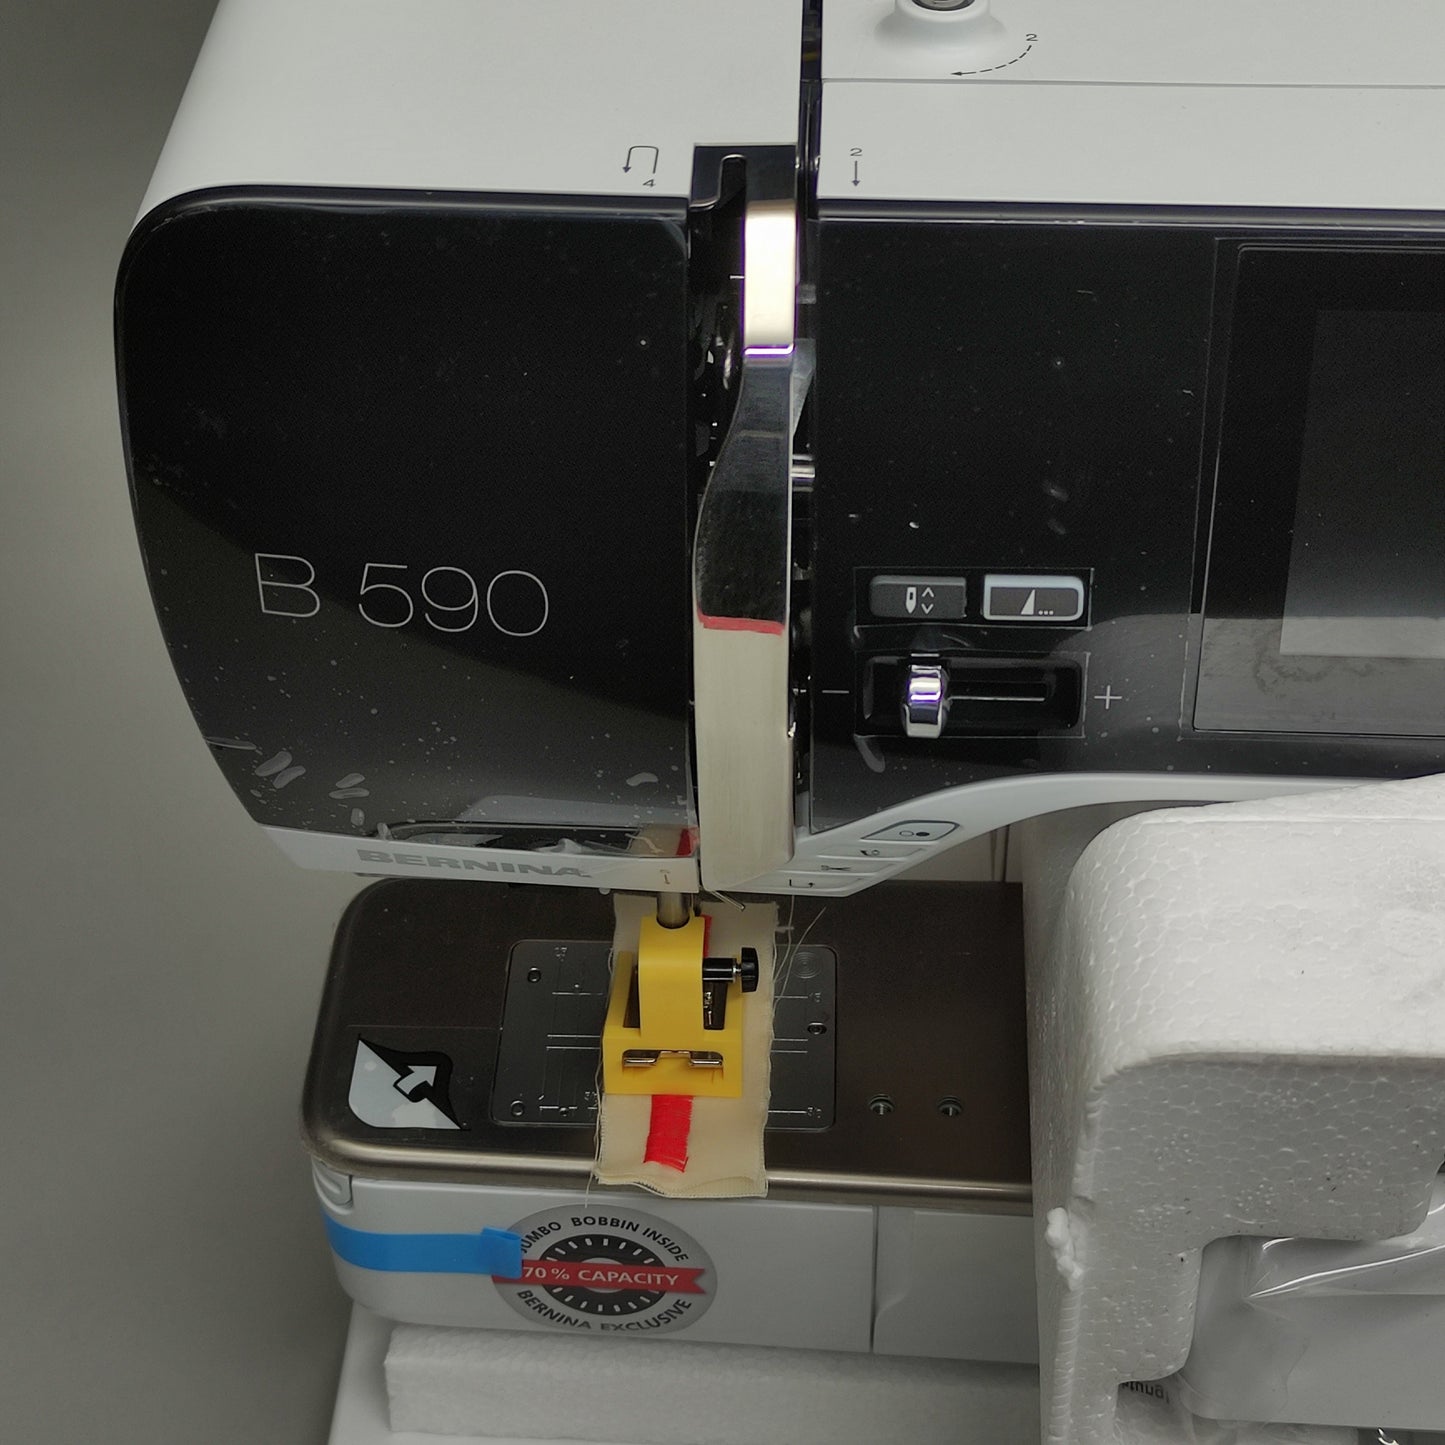 BERNINA SEWING MACHINE B590 Sewing, Quilting & Embroidery Machine